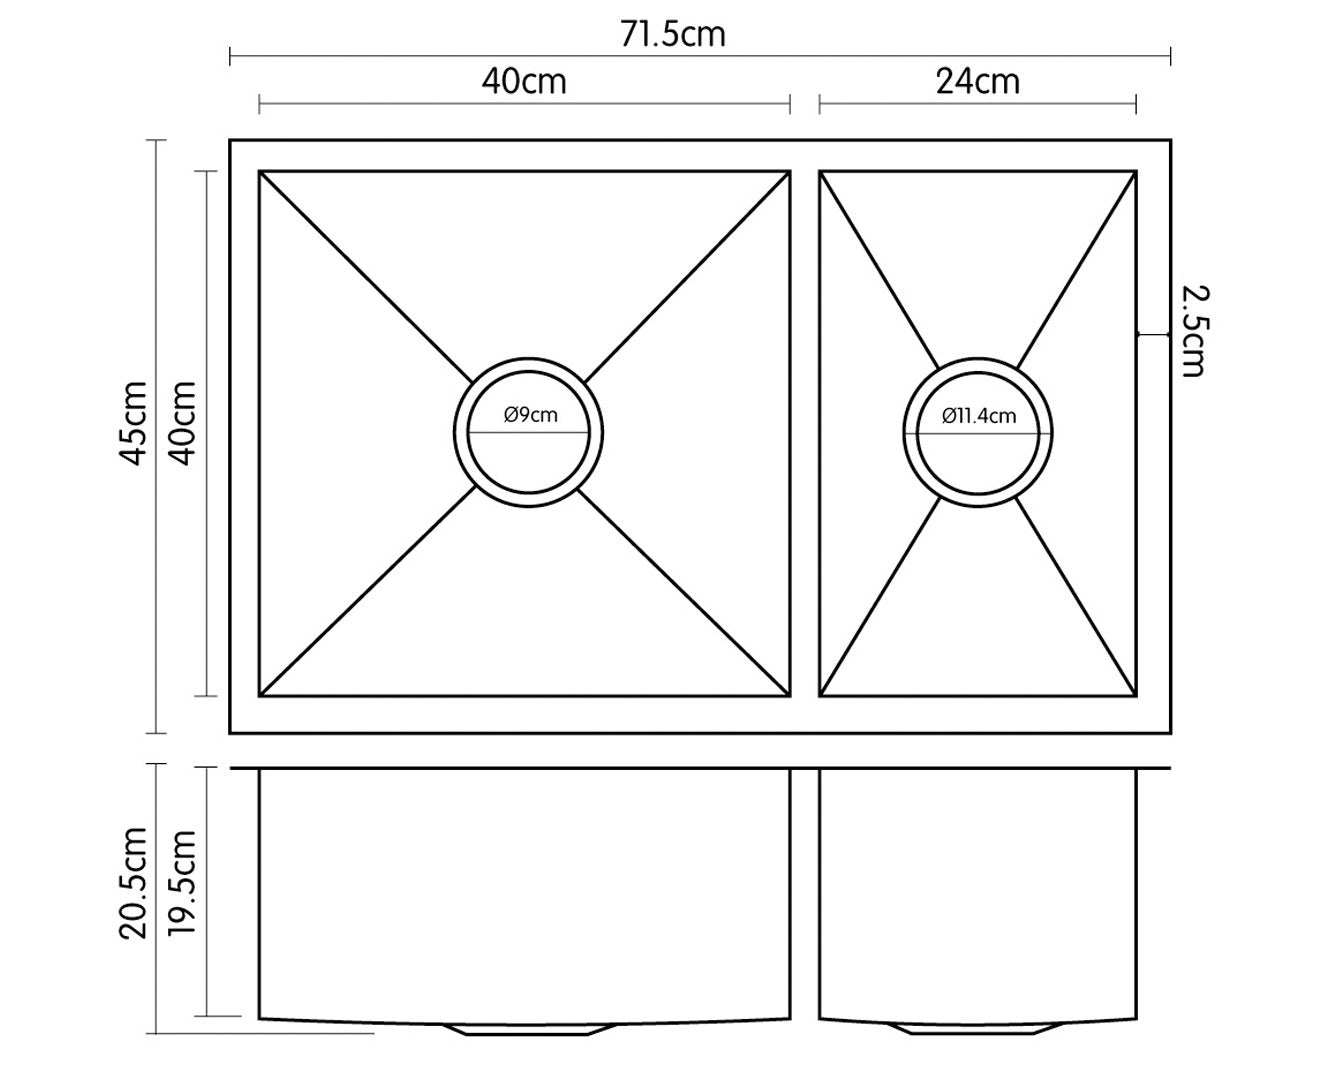 304 Stainless Steel Undermount Topmount Kitchen Laundry Sink - 715 x 450mm